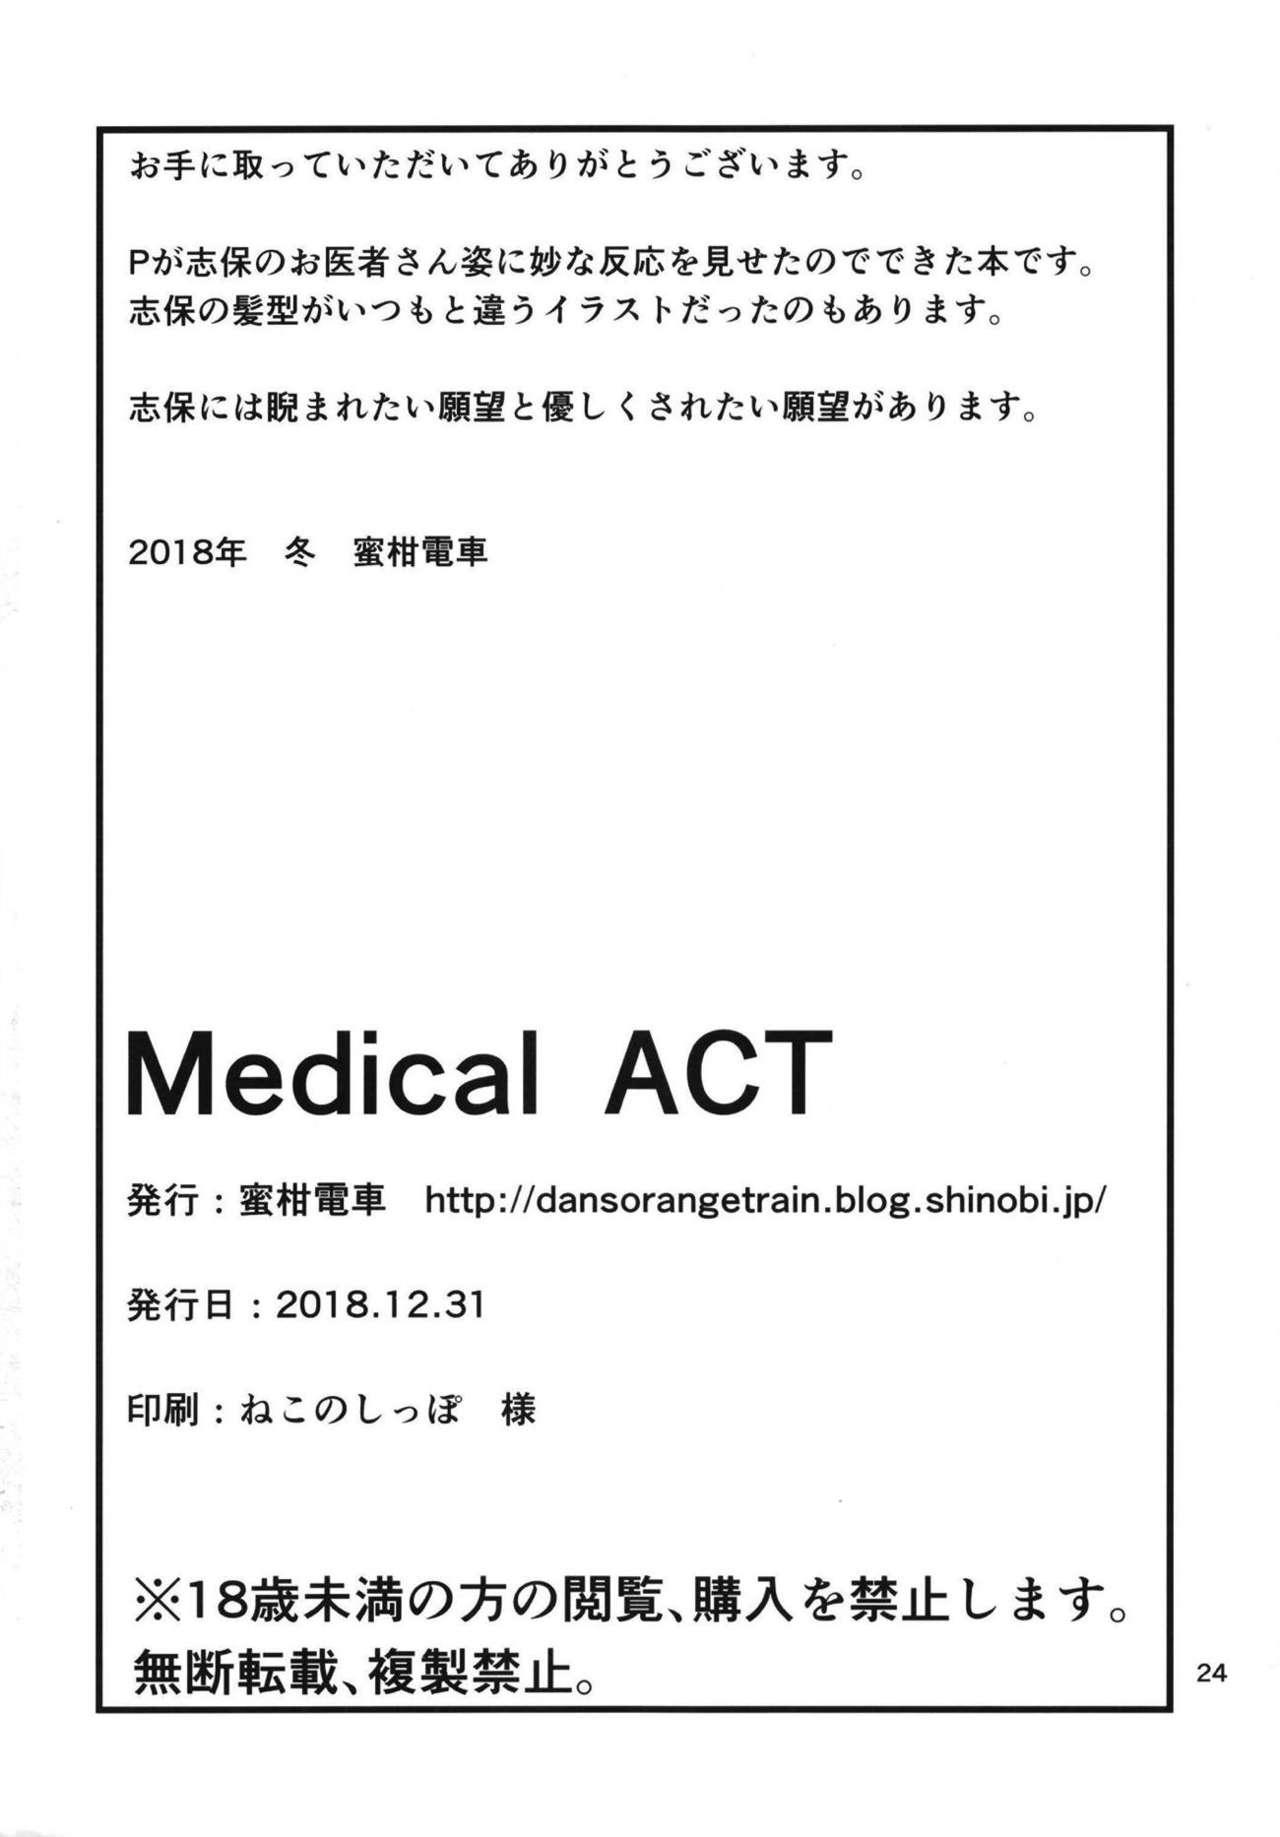 Medical ACT 24